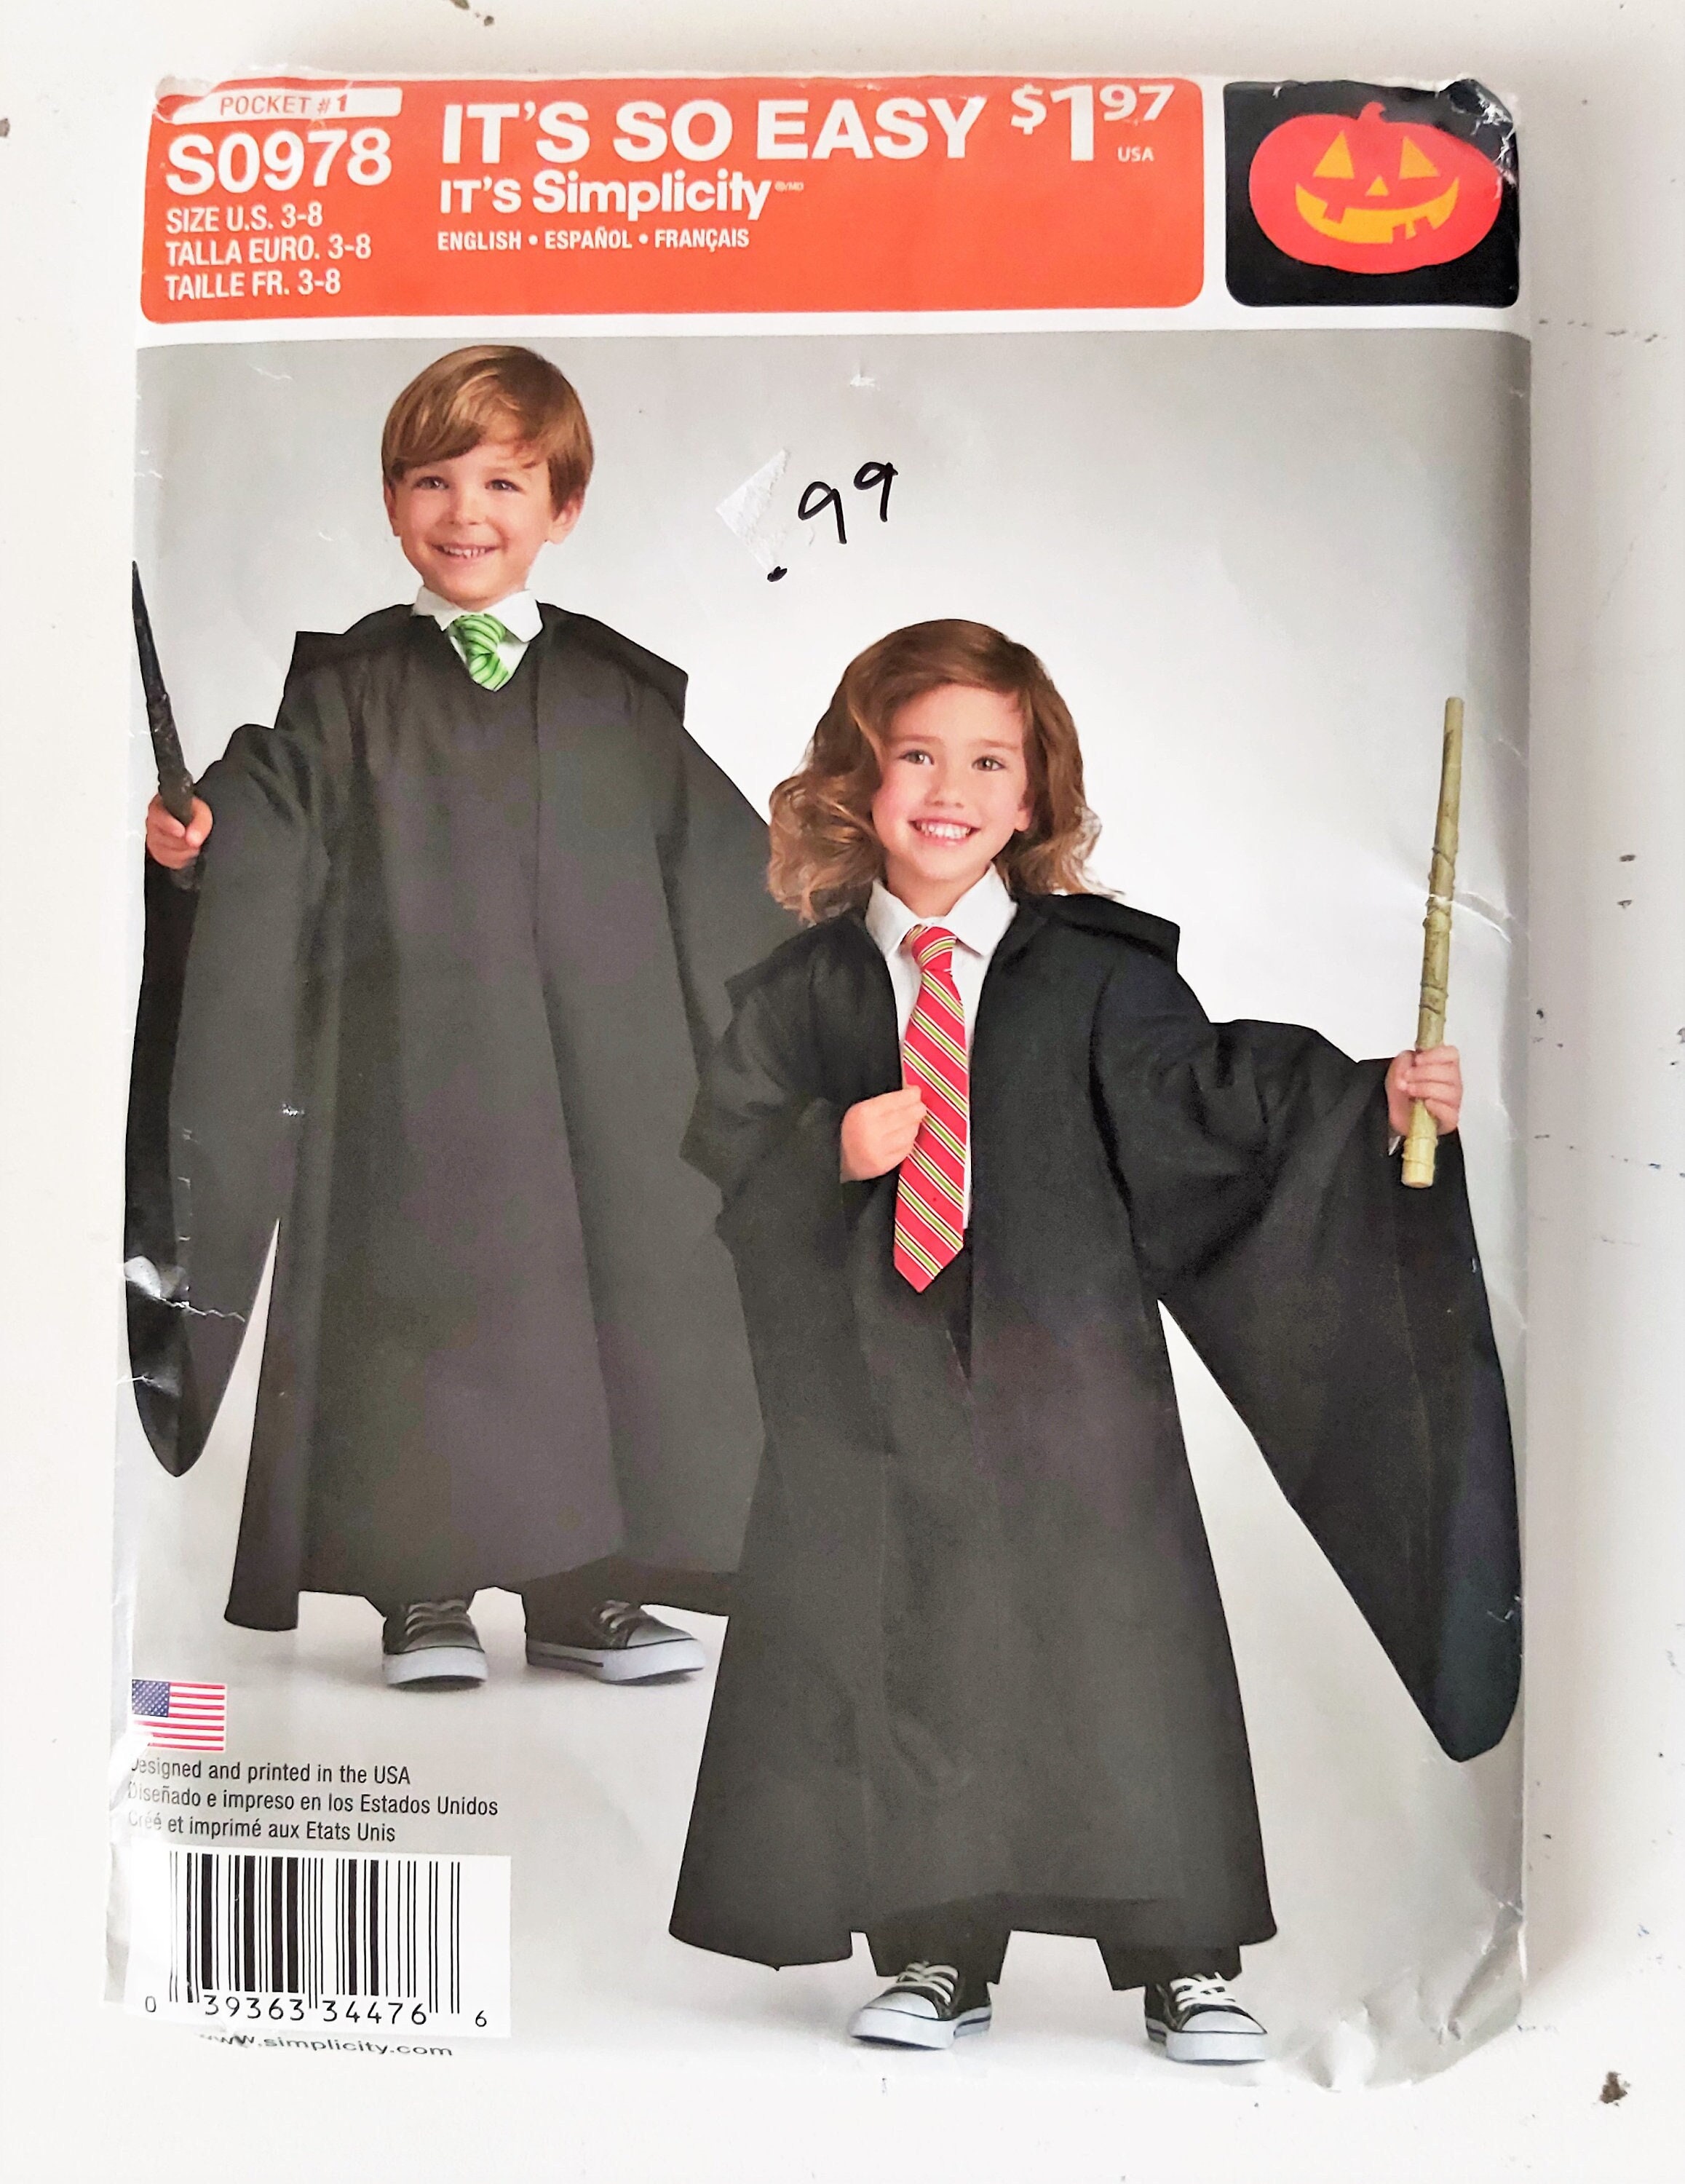 Kids Adult Slytherin Robe Cloak Costume For Children Men Women Magic School  Uniform Wizard Cosplay Halloween Costume - Cosplay Costumes - AliExpress